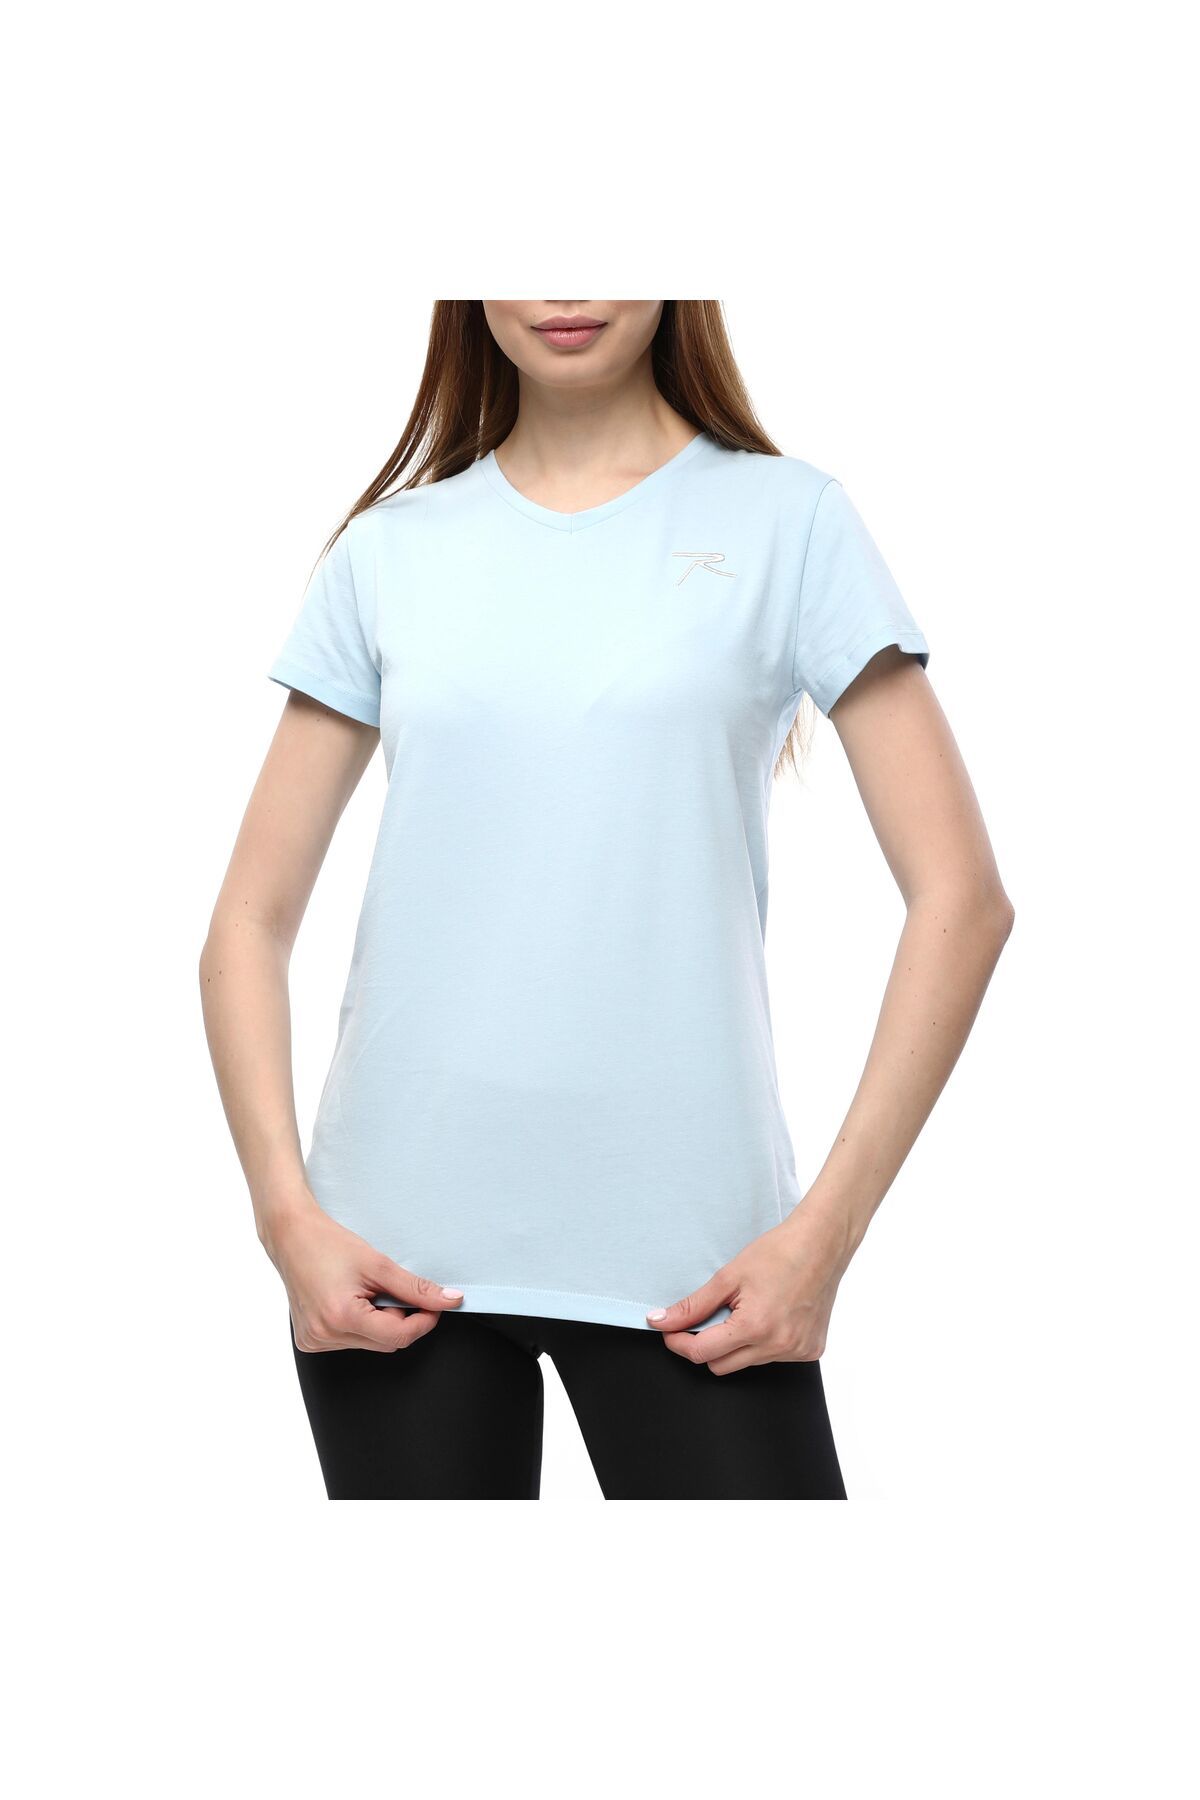 raru Kadın %100 Pamuk T-Shirt MULIER MİNT